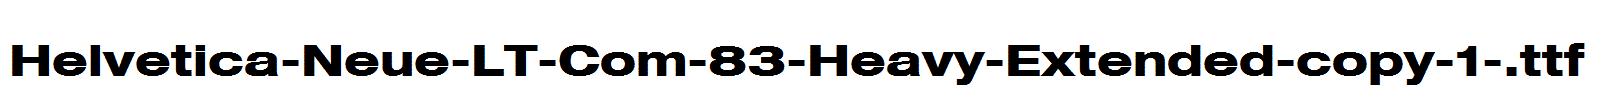 Helvetica-Neue-LT-Com-83-Heavy-Extended-copy-1-.ttf